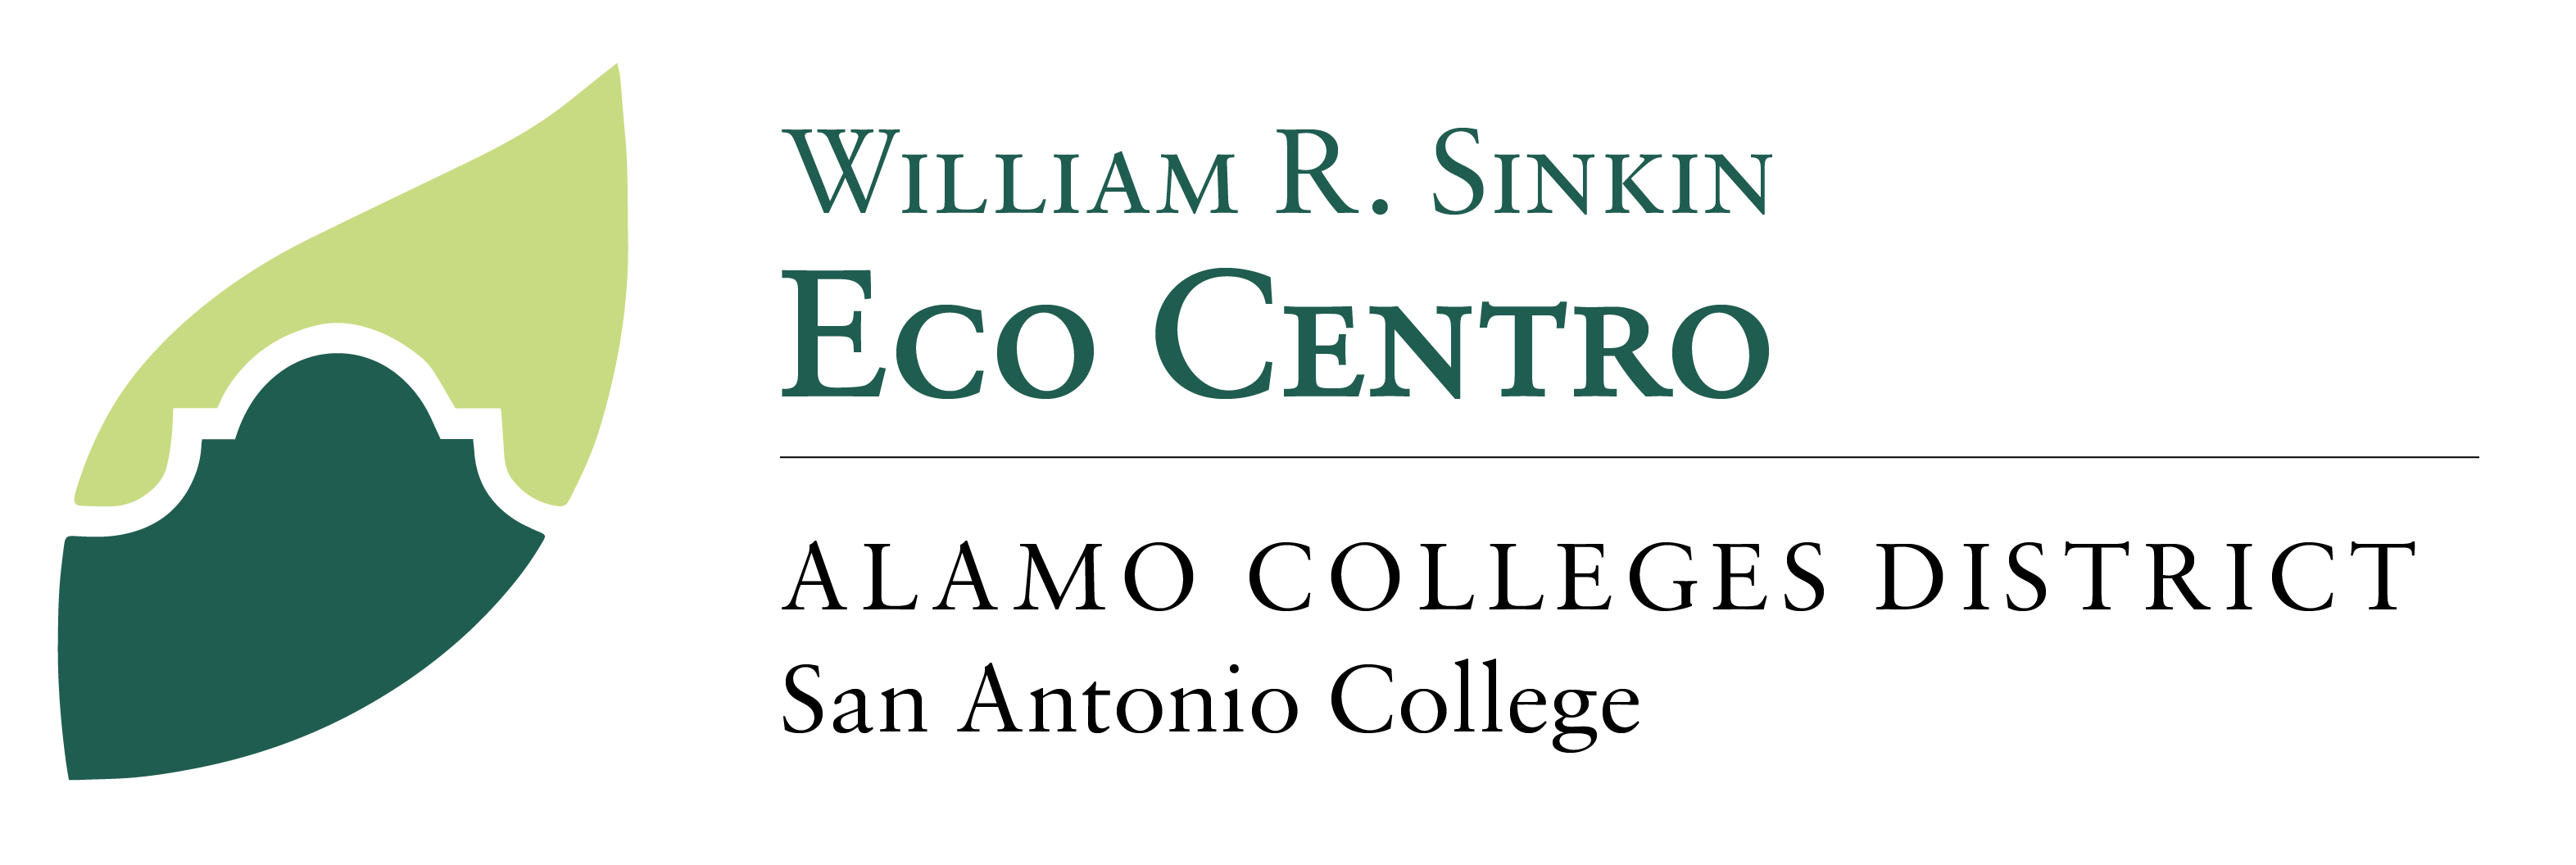 Eco Centro logo